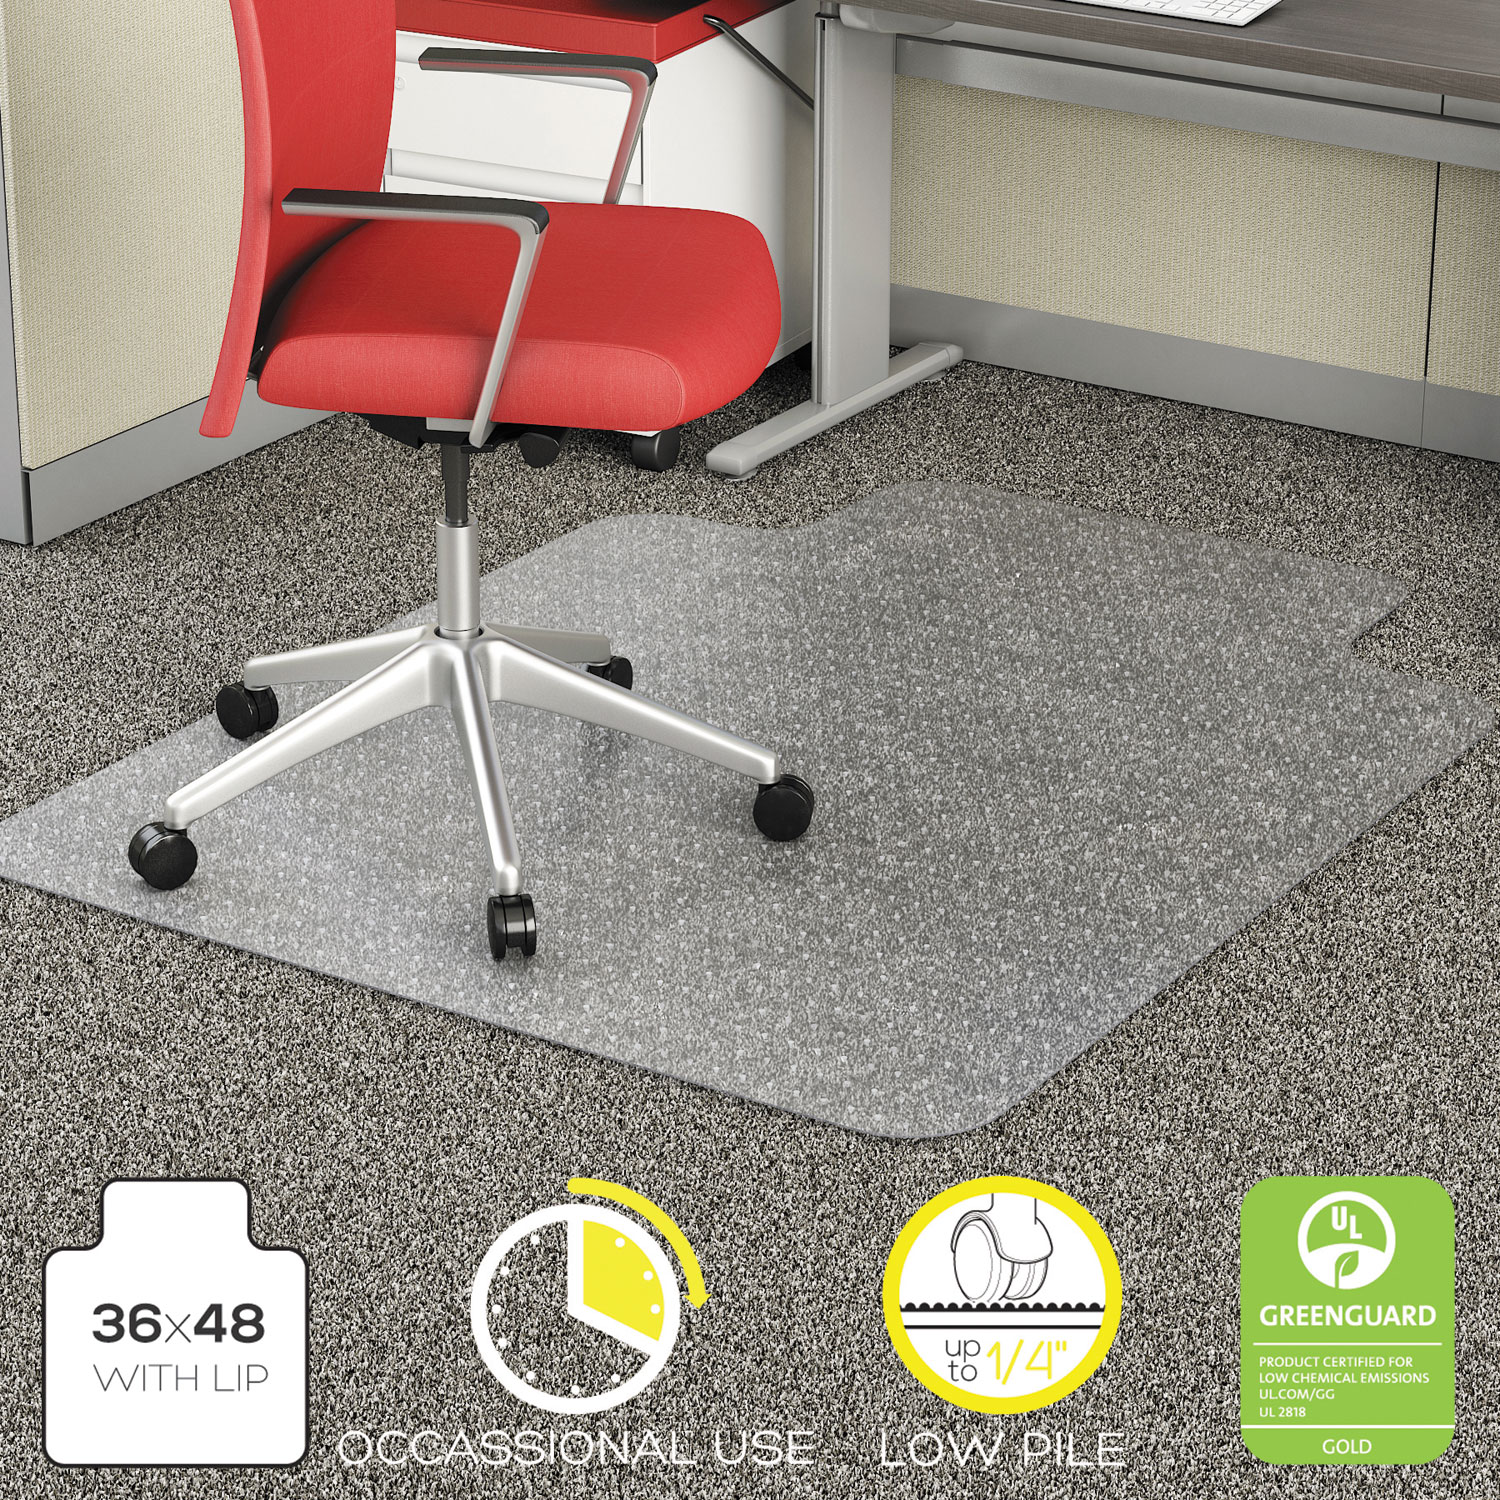  deflecto CM11112COM EconoMat Occasional Use Chair Mat, Low Pile Carpet, Roll, 36 x 48, Lipped, Clear (DEFCM11112COM) 